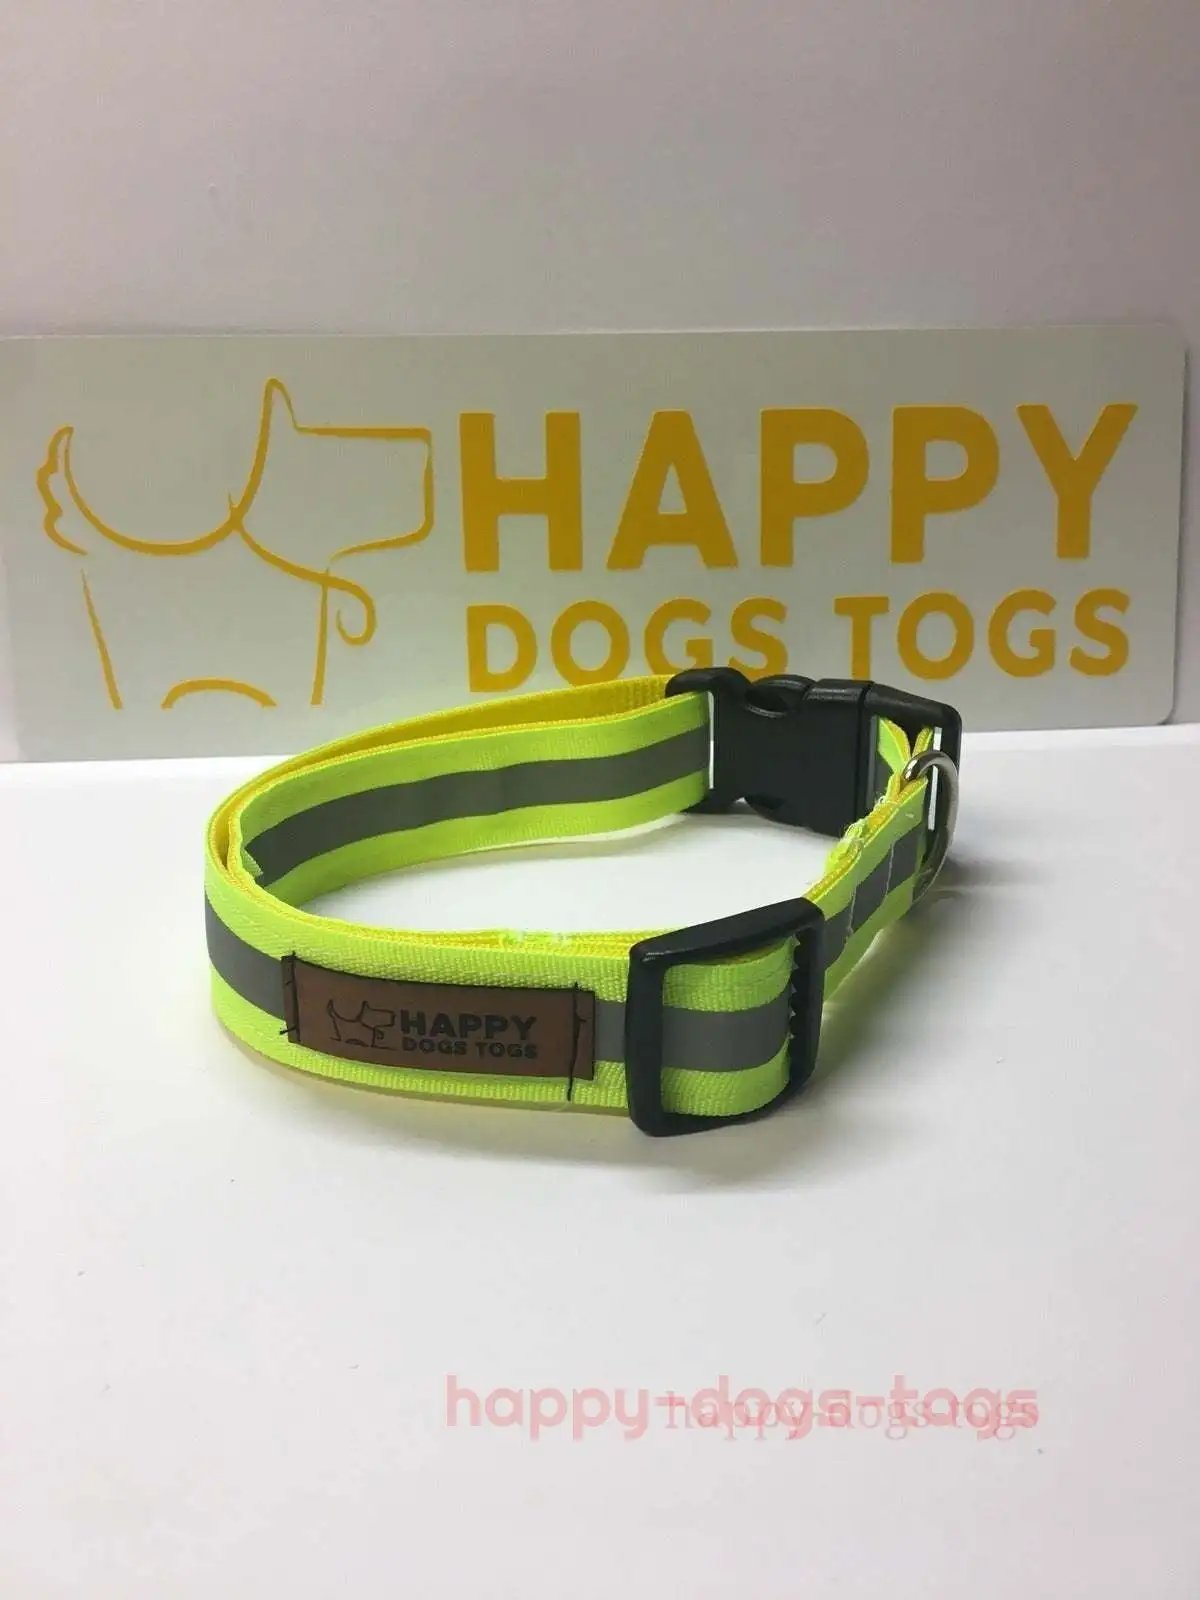 Flourescent Yellow reflective safety dog collar  size L